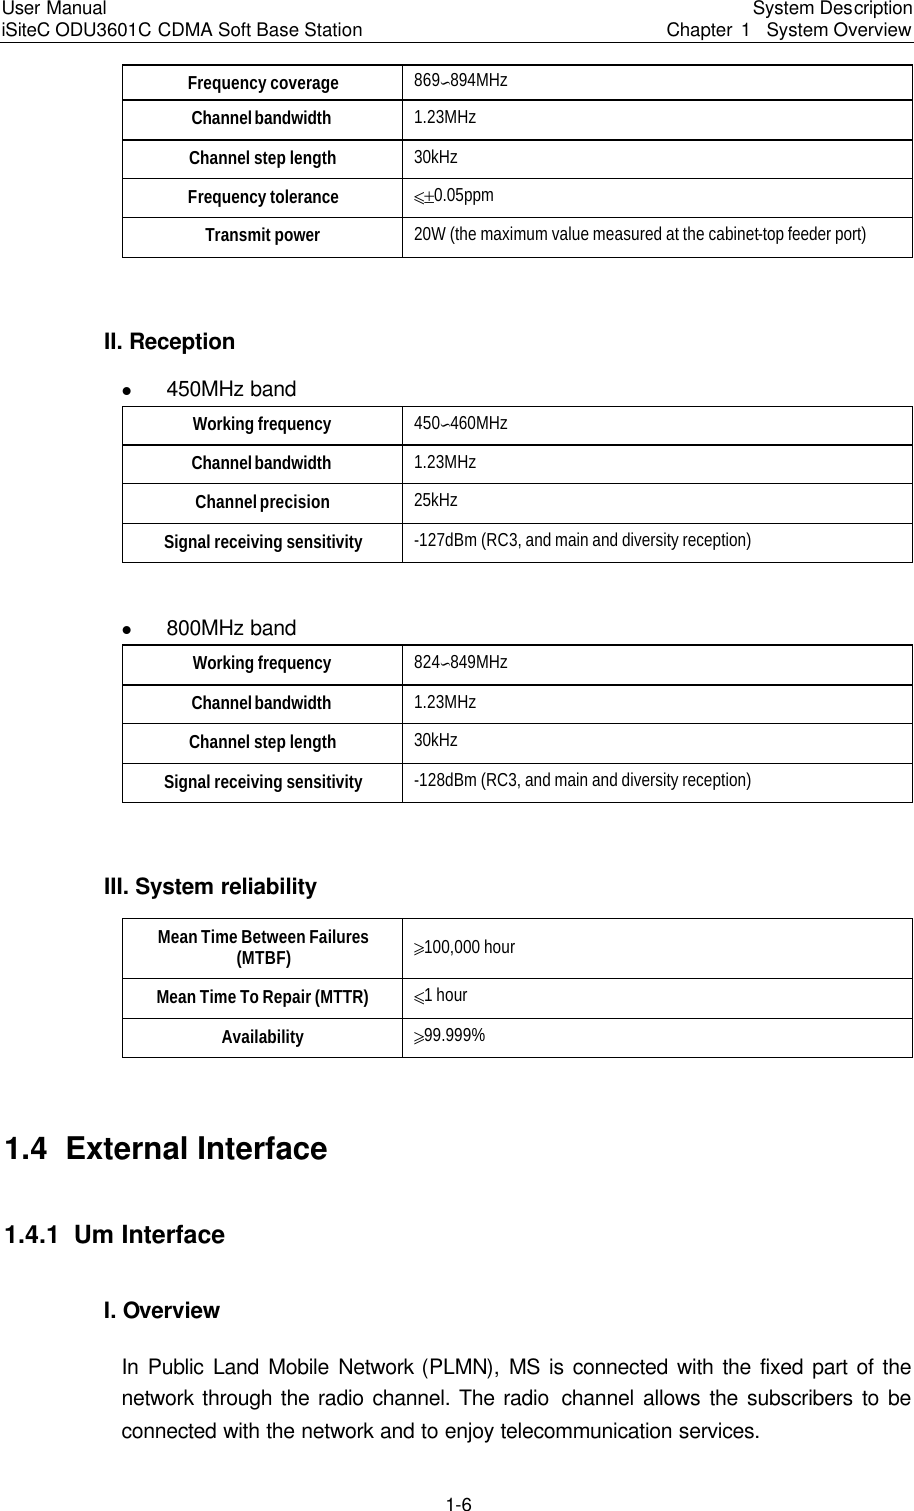 Page 9 of Huawei Technologies ODU3601C-800 CDMA Base Station User Manual 2